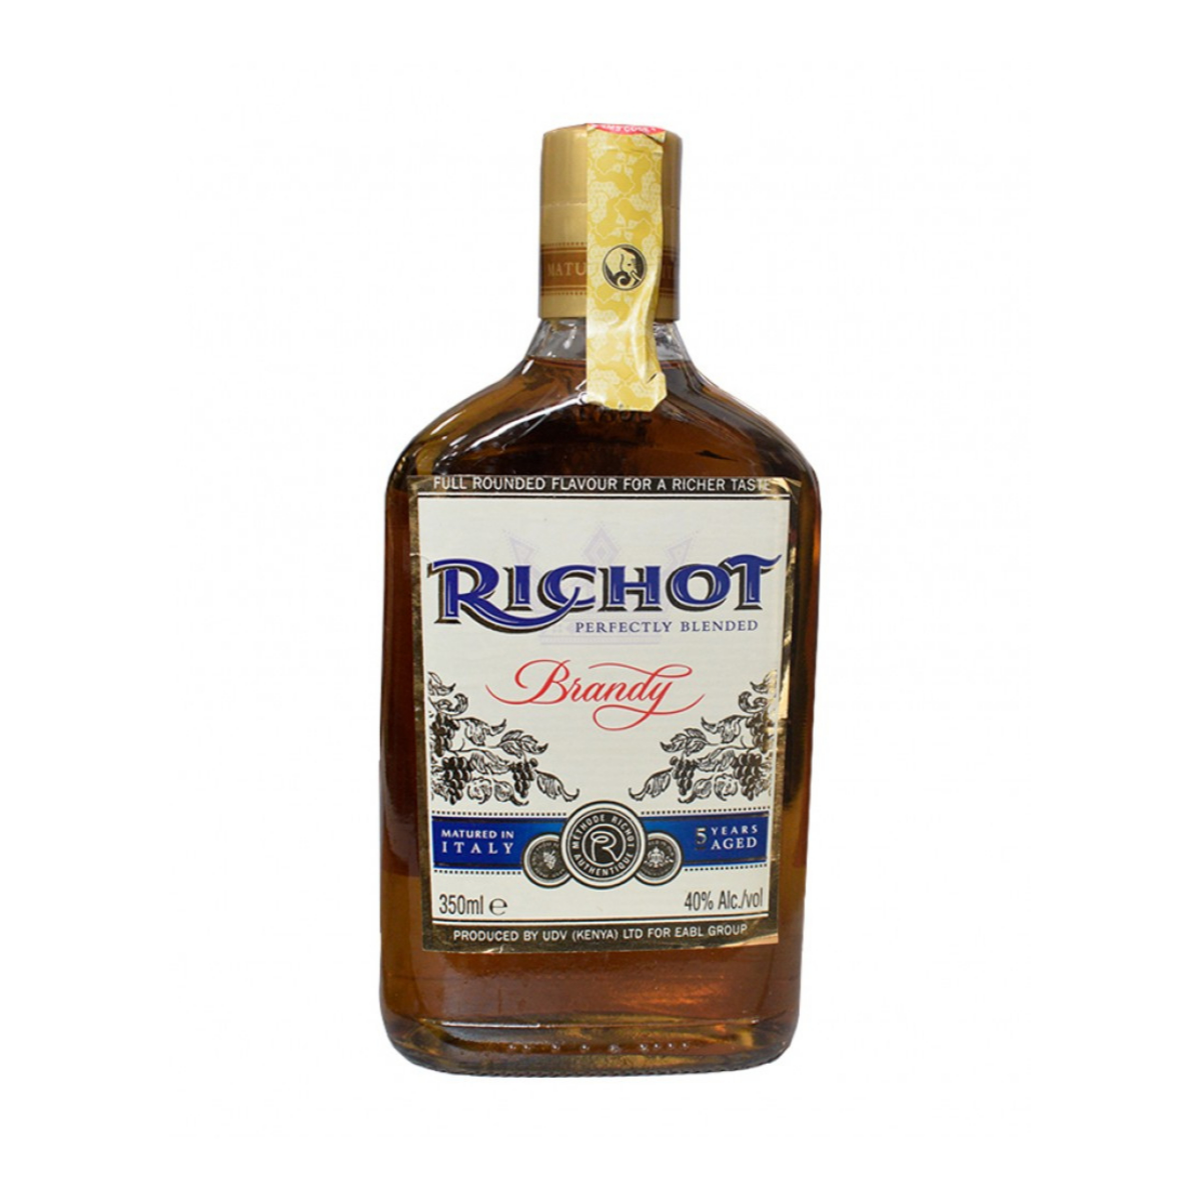 Richot Brandy 350Ml